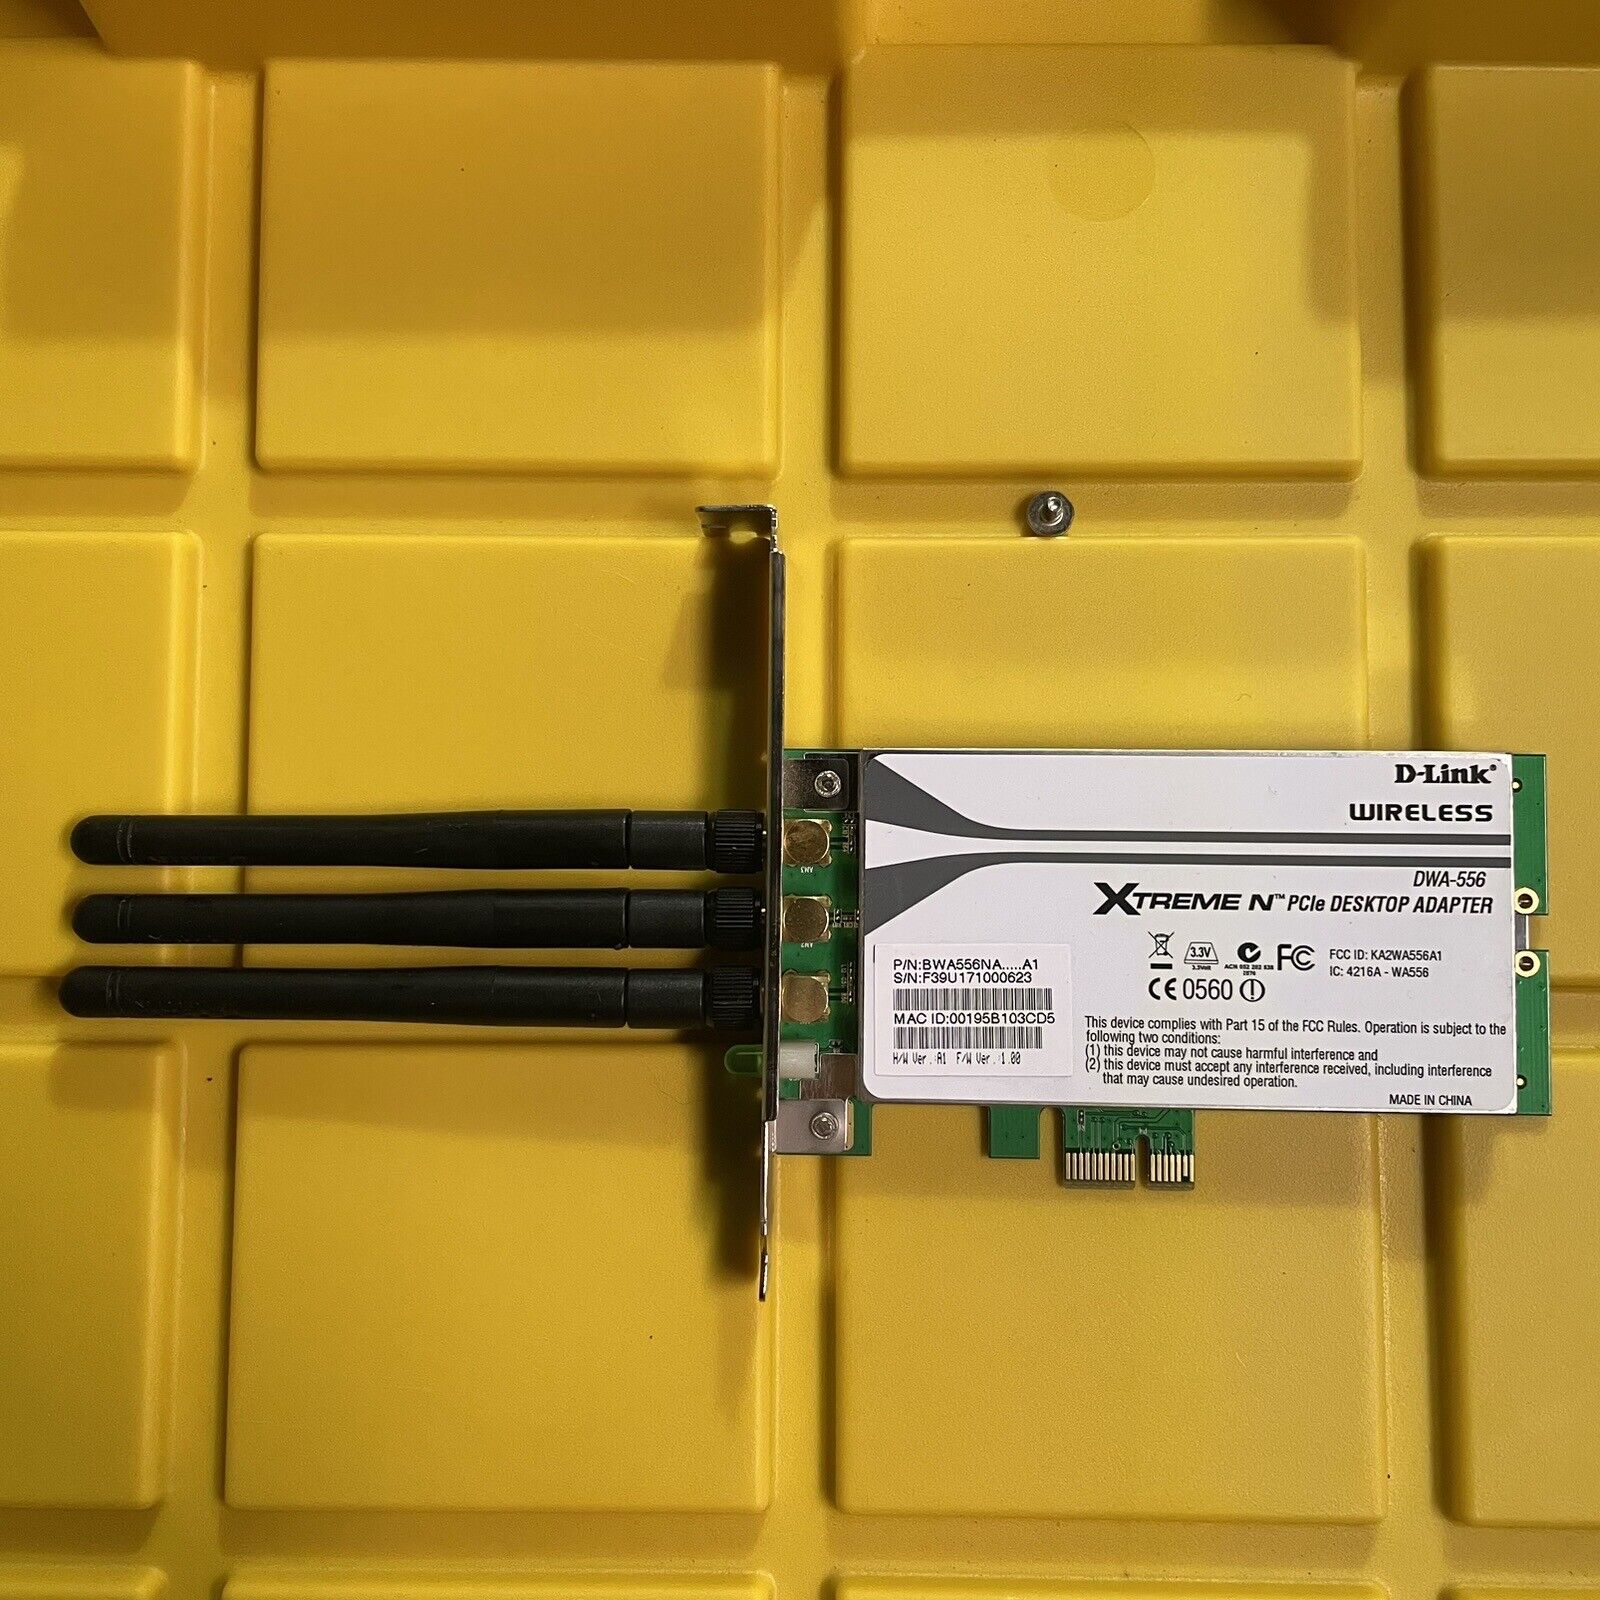 D-Link DWA-556 XTREME N PCIe Wireless Internet Desktop Adapter w/ 3 Antennas